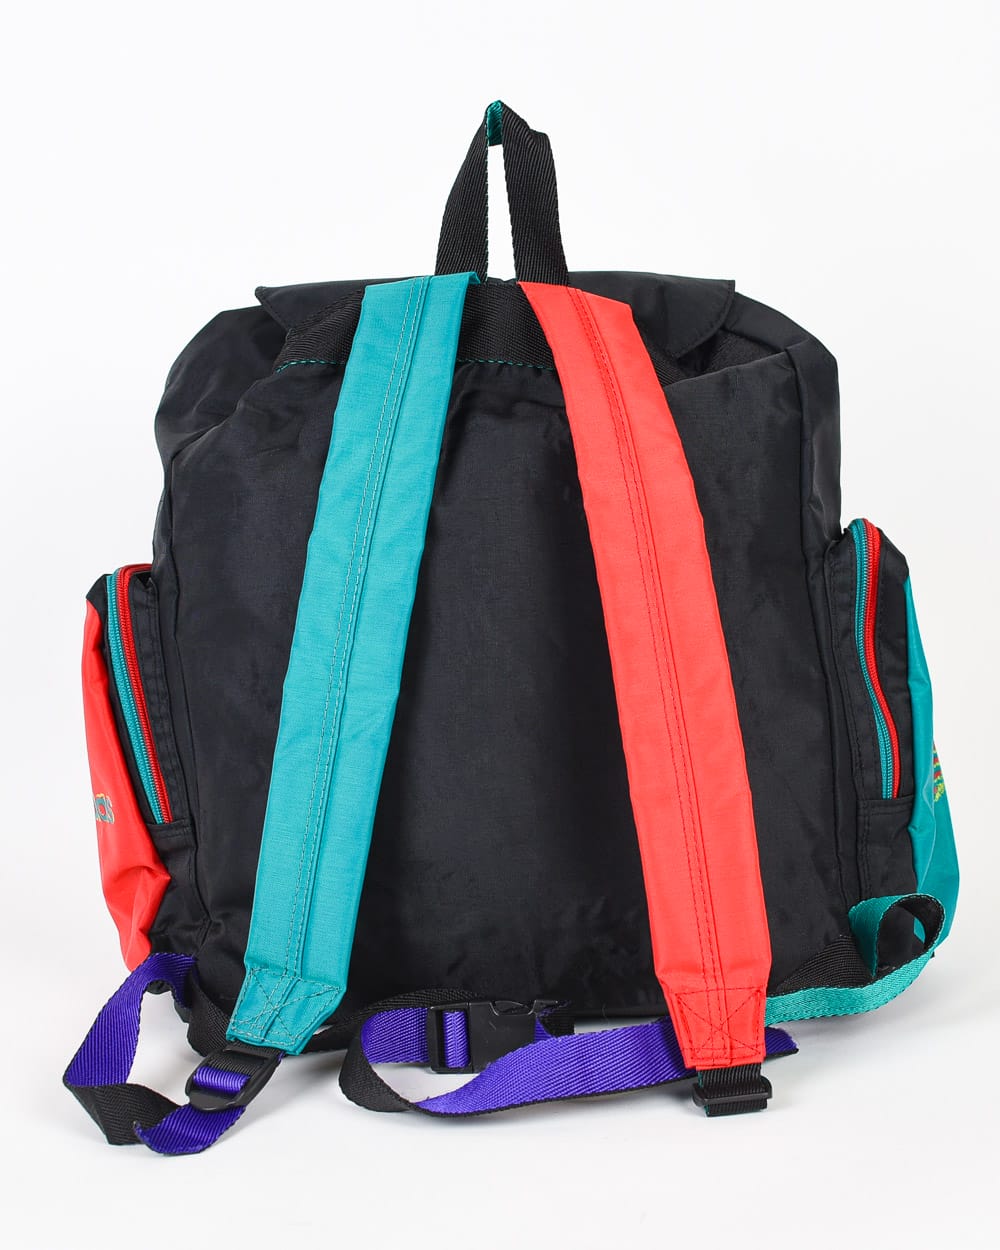  Adidas Backpack